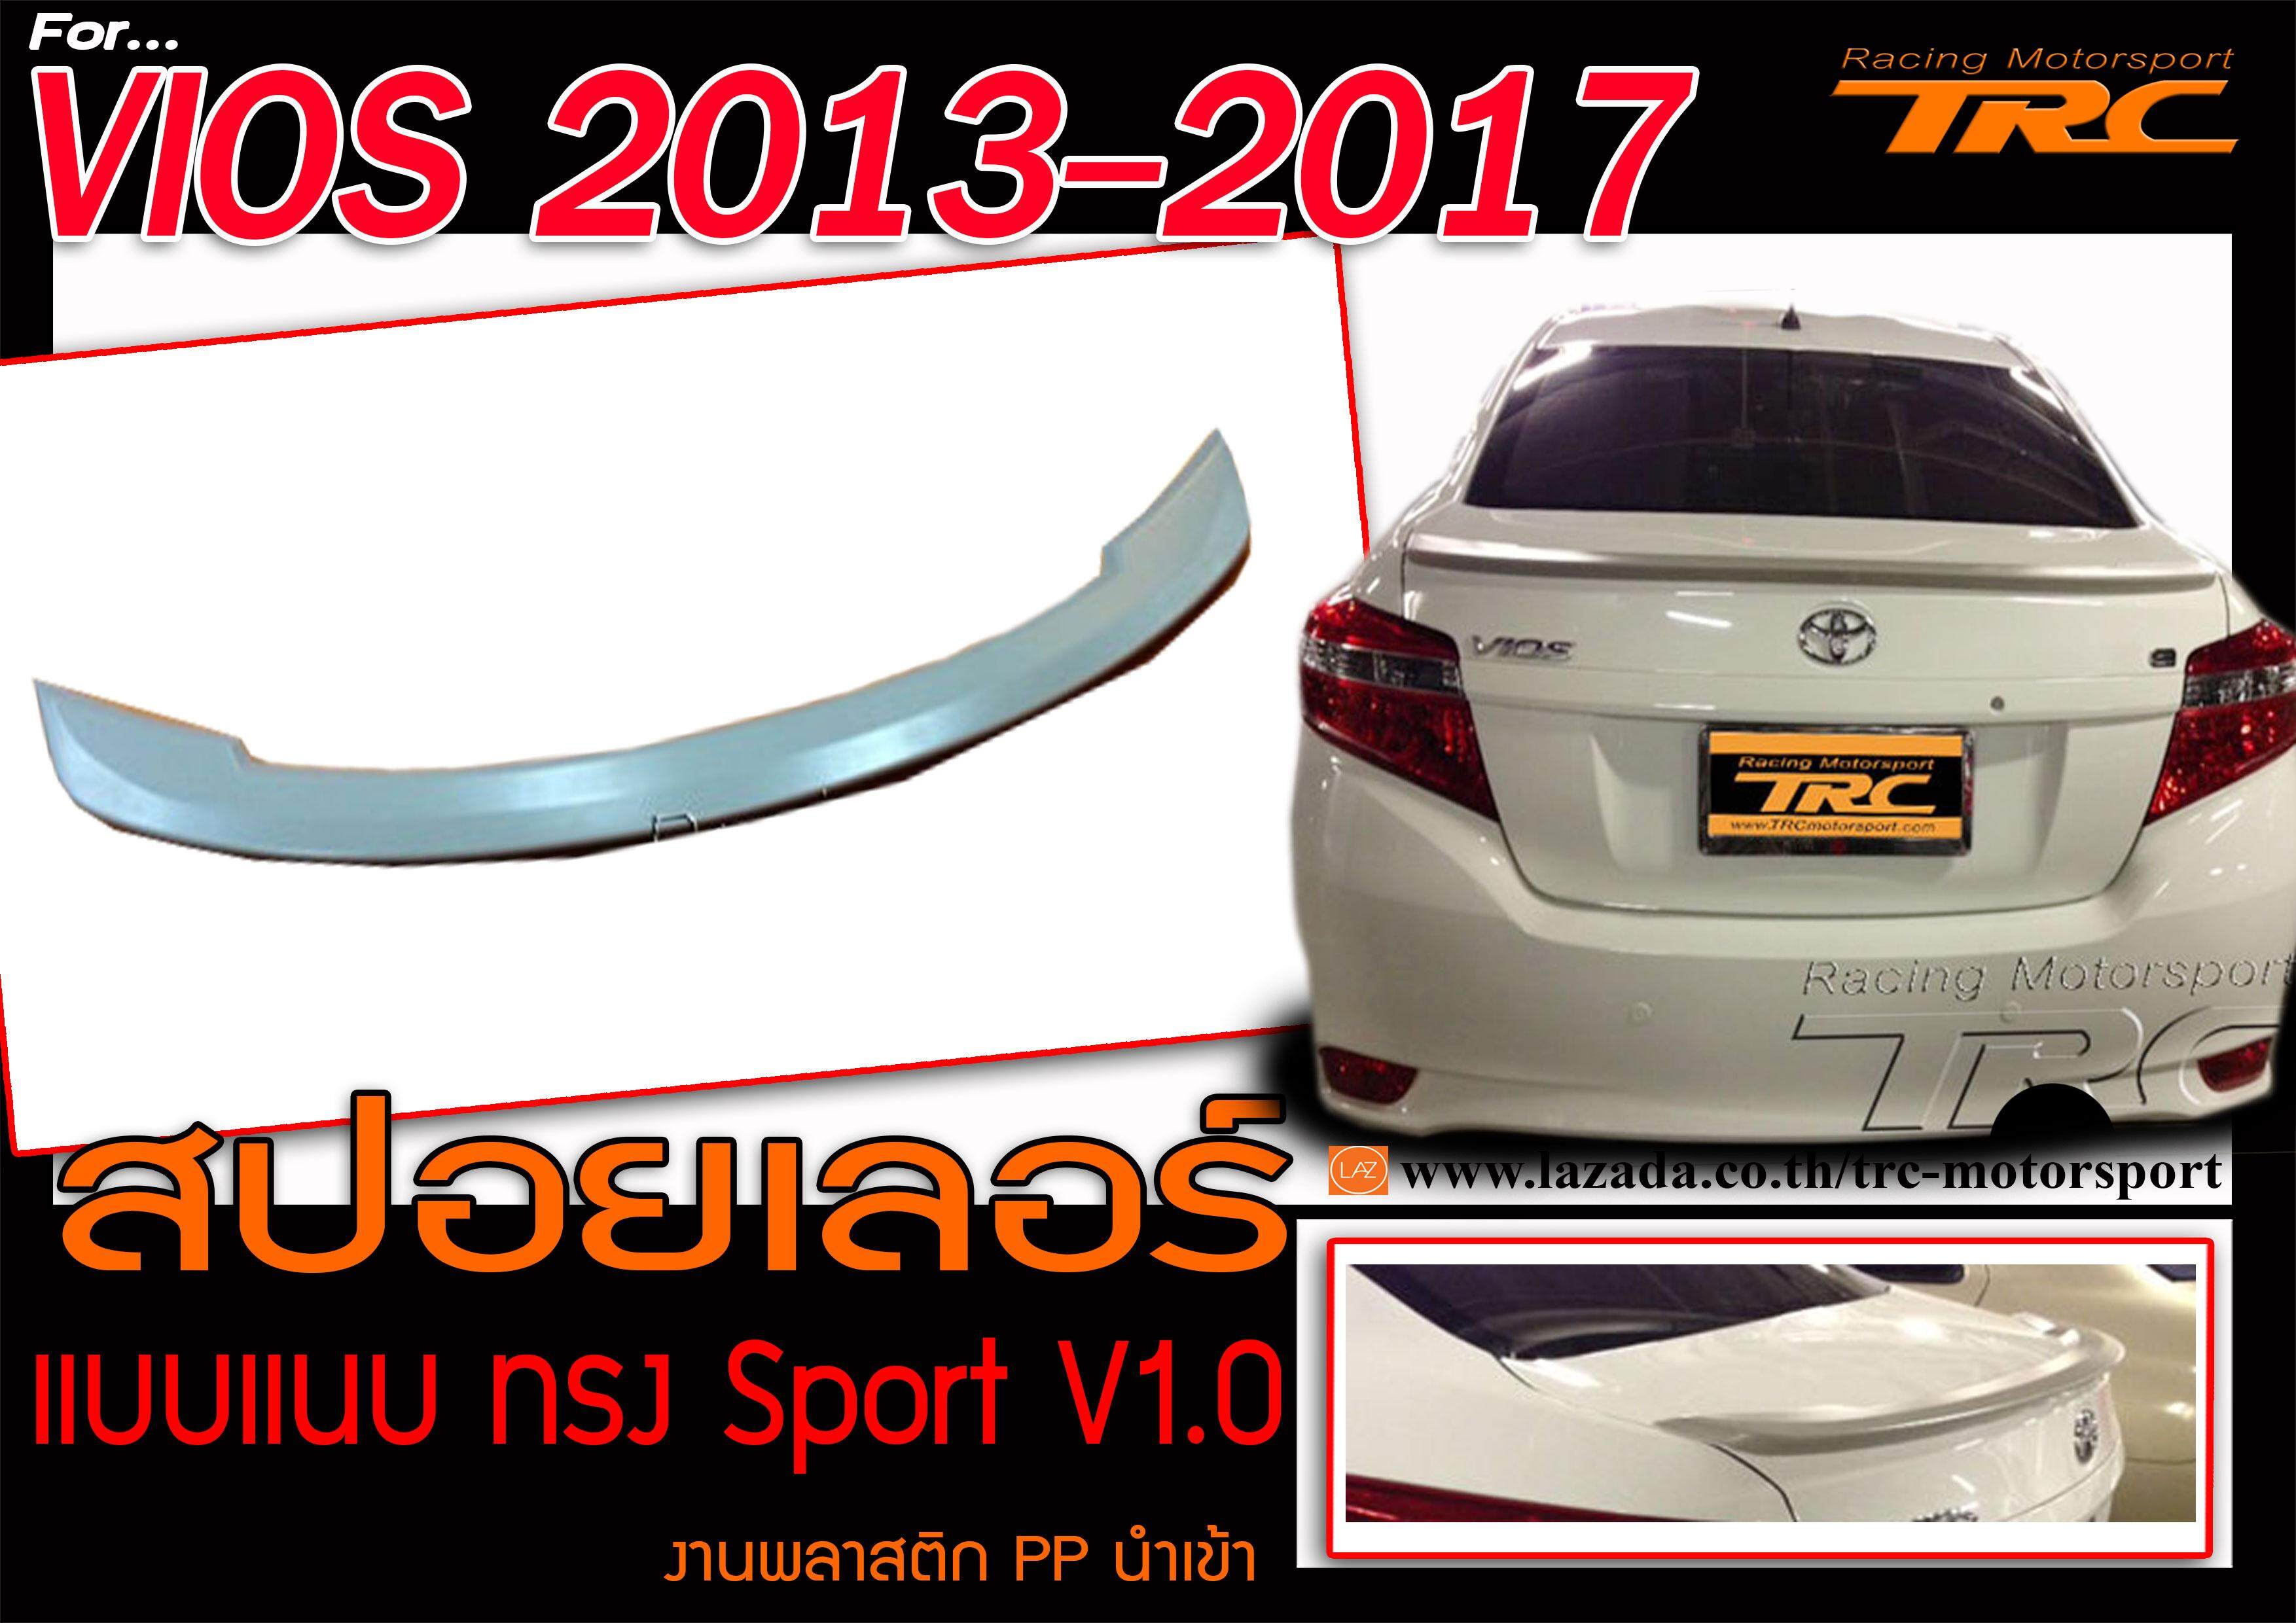 VIOS 2013 2014 2015 2016 2017 สปอยเลอร์ แบบแนบ  ทรง Sport V1.0